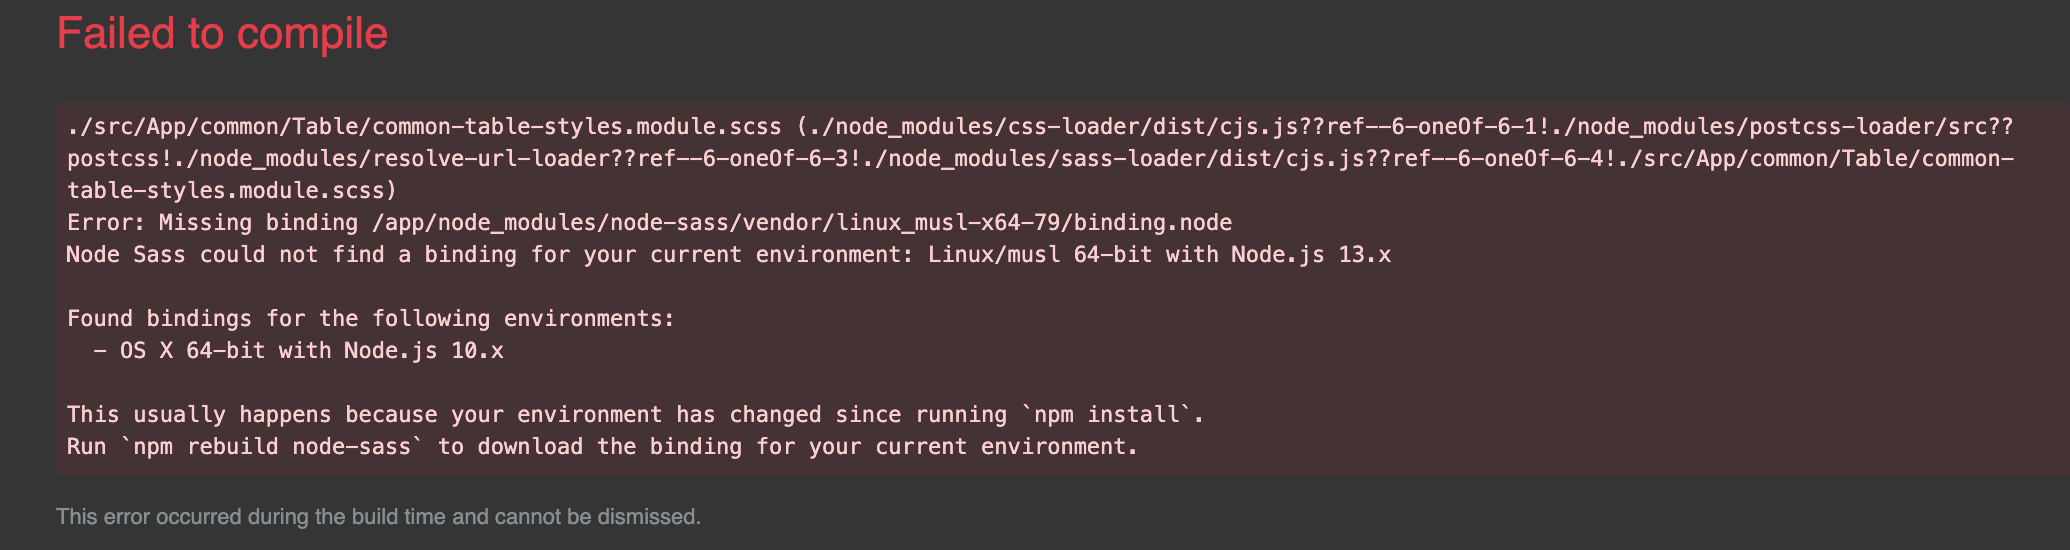 Ошибка установки npm: неожиданный конец ввода json при разборе рядом с '… nt-webpack-plugin ":" 0 "